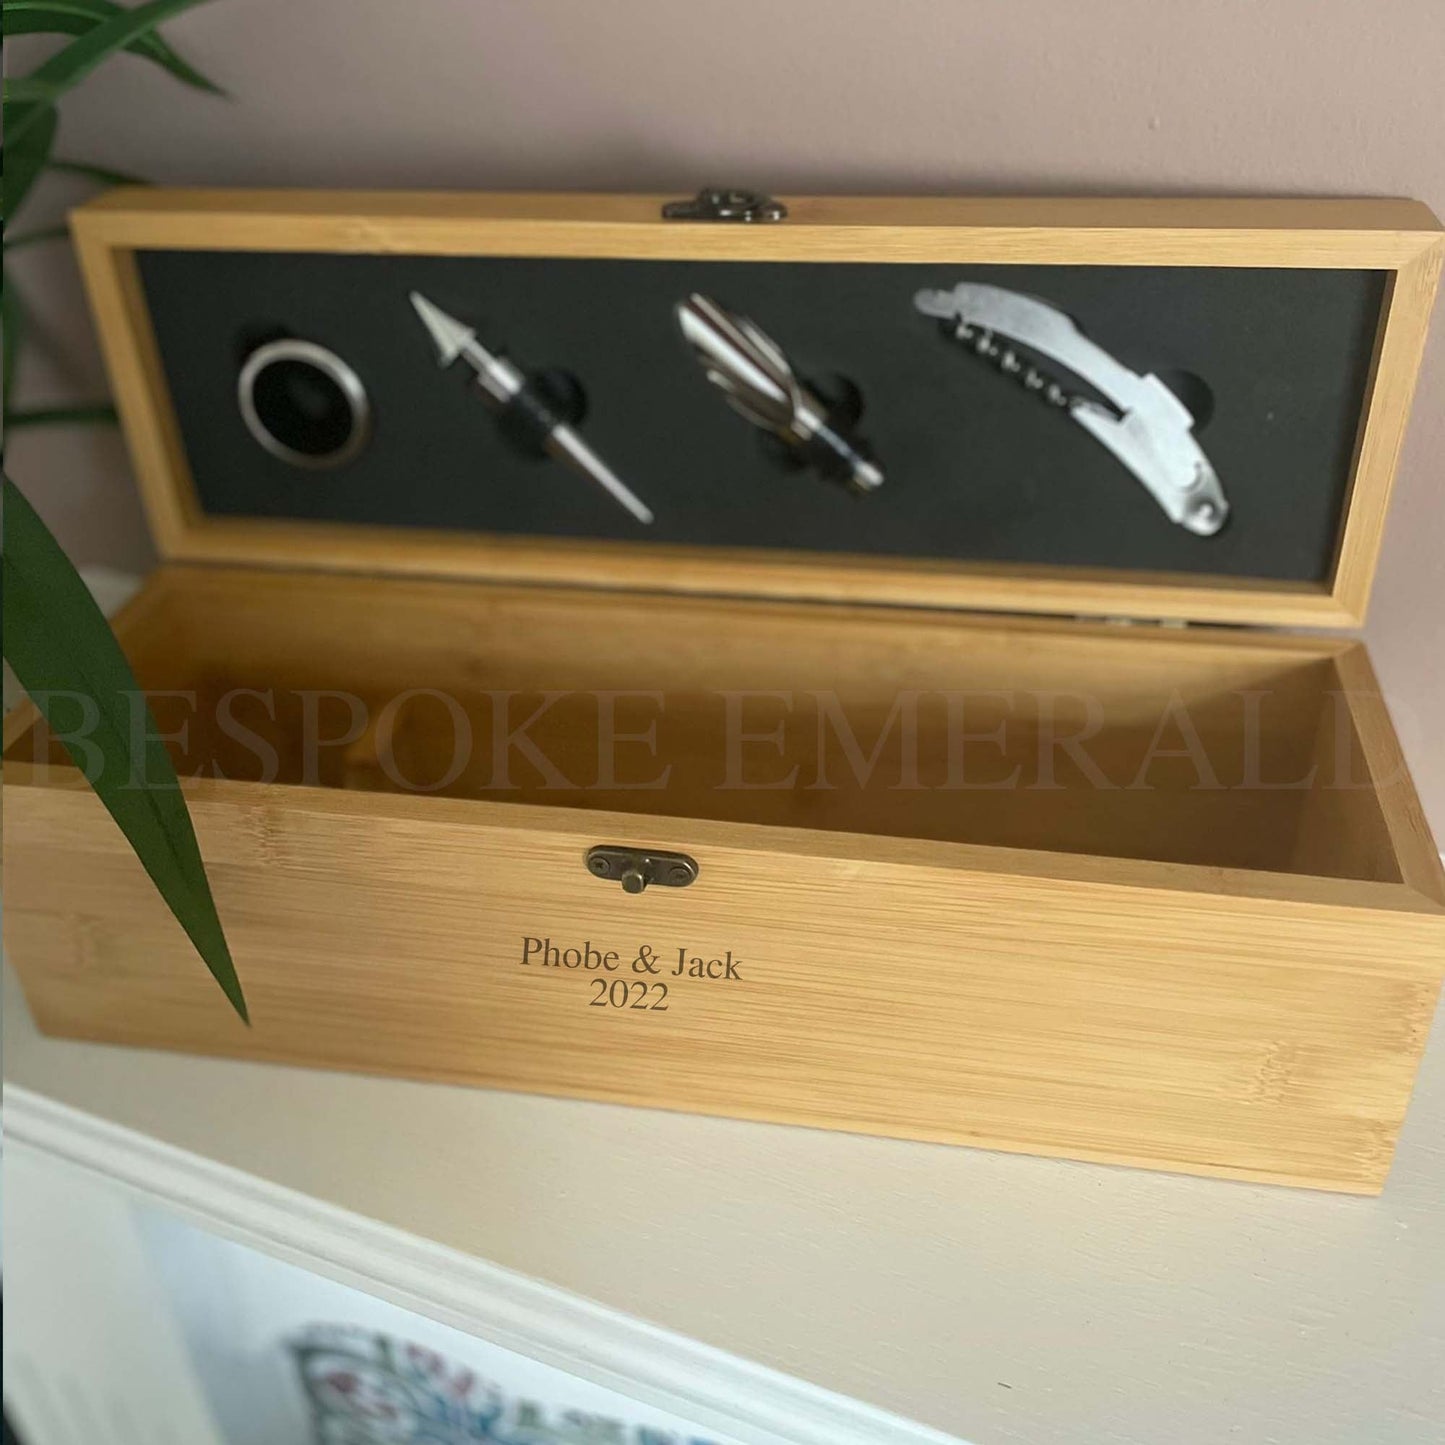 You + Me personalised wine box - Bespoke Emerald Embroidery Ltd